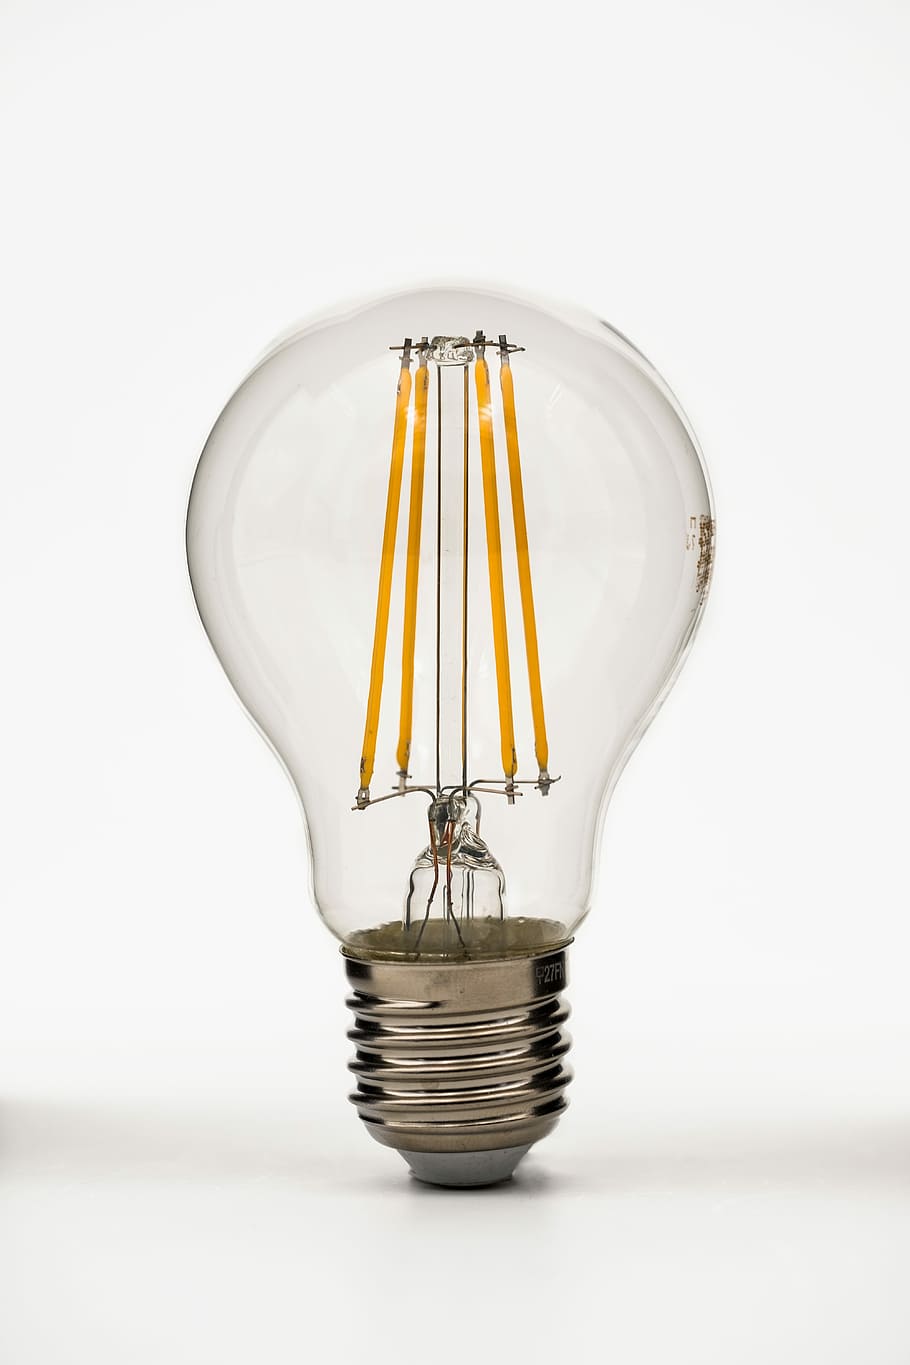 bulbs, light bulb, lamp, sparlampe, energiesparlampe, save